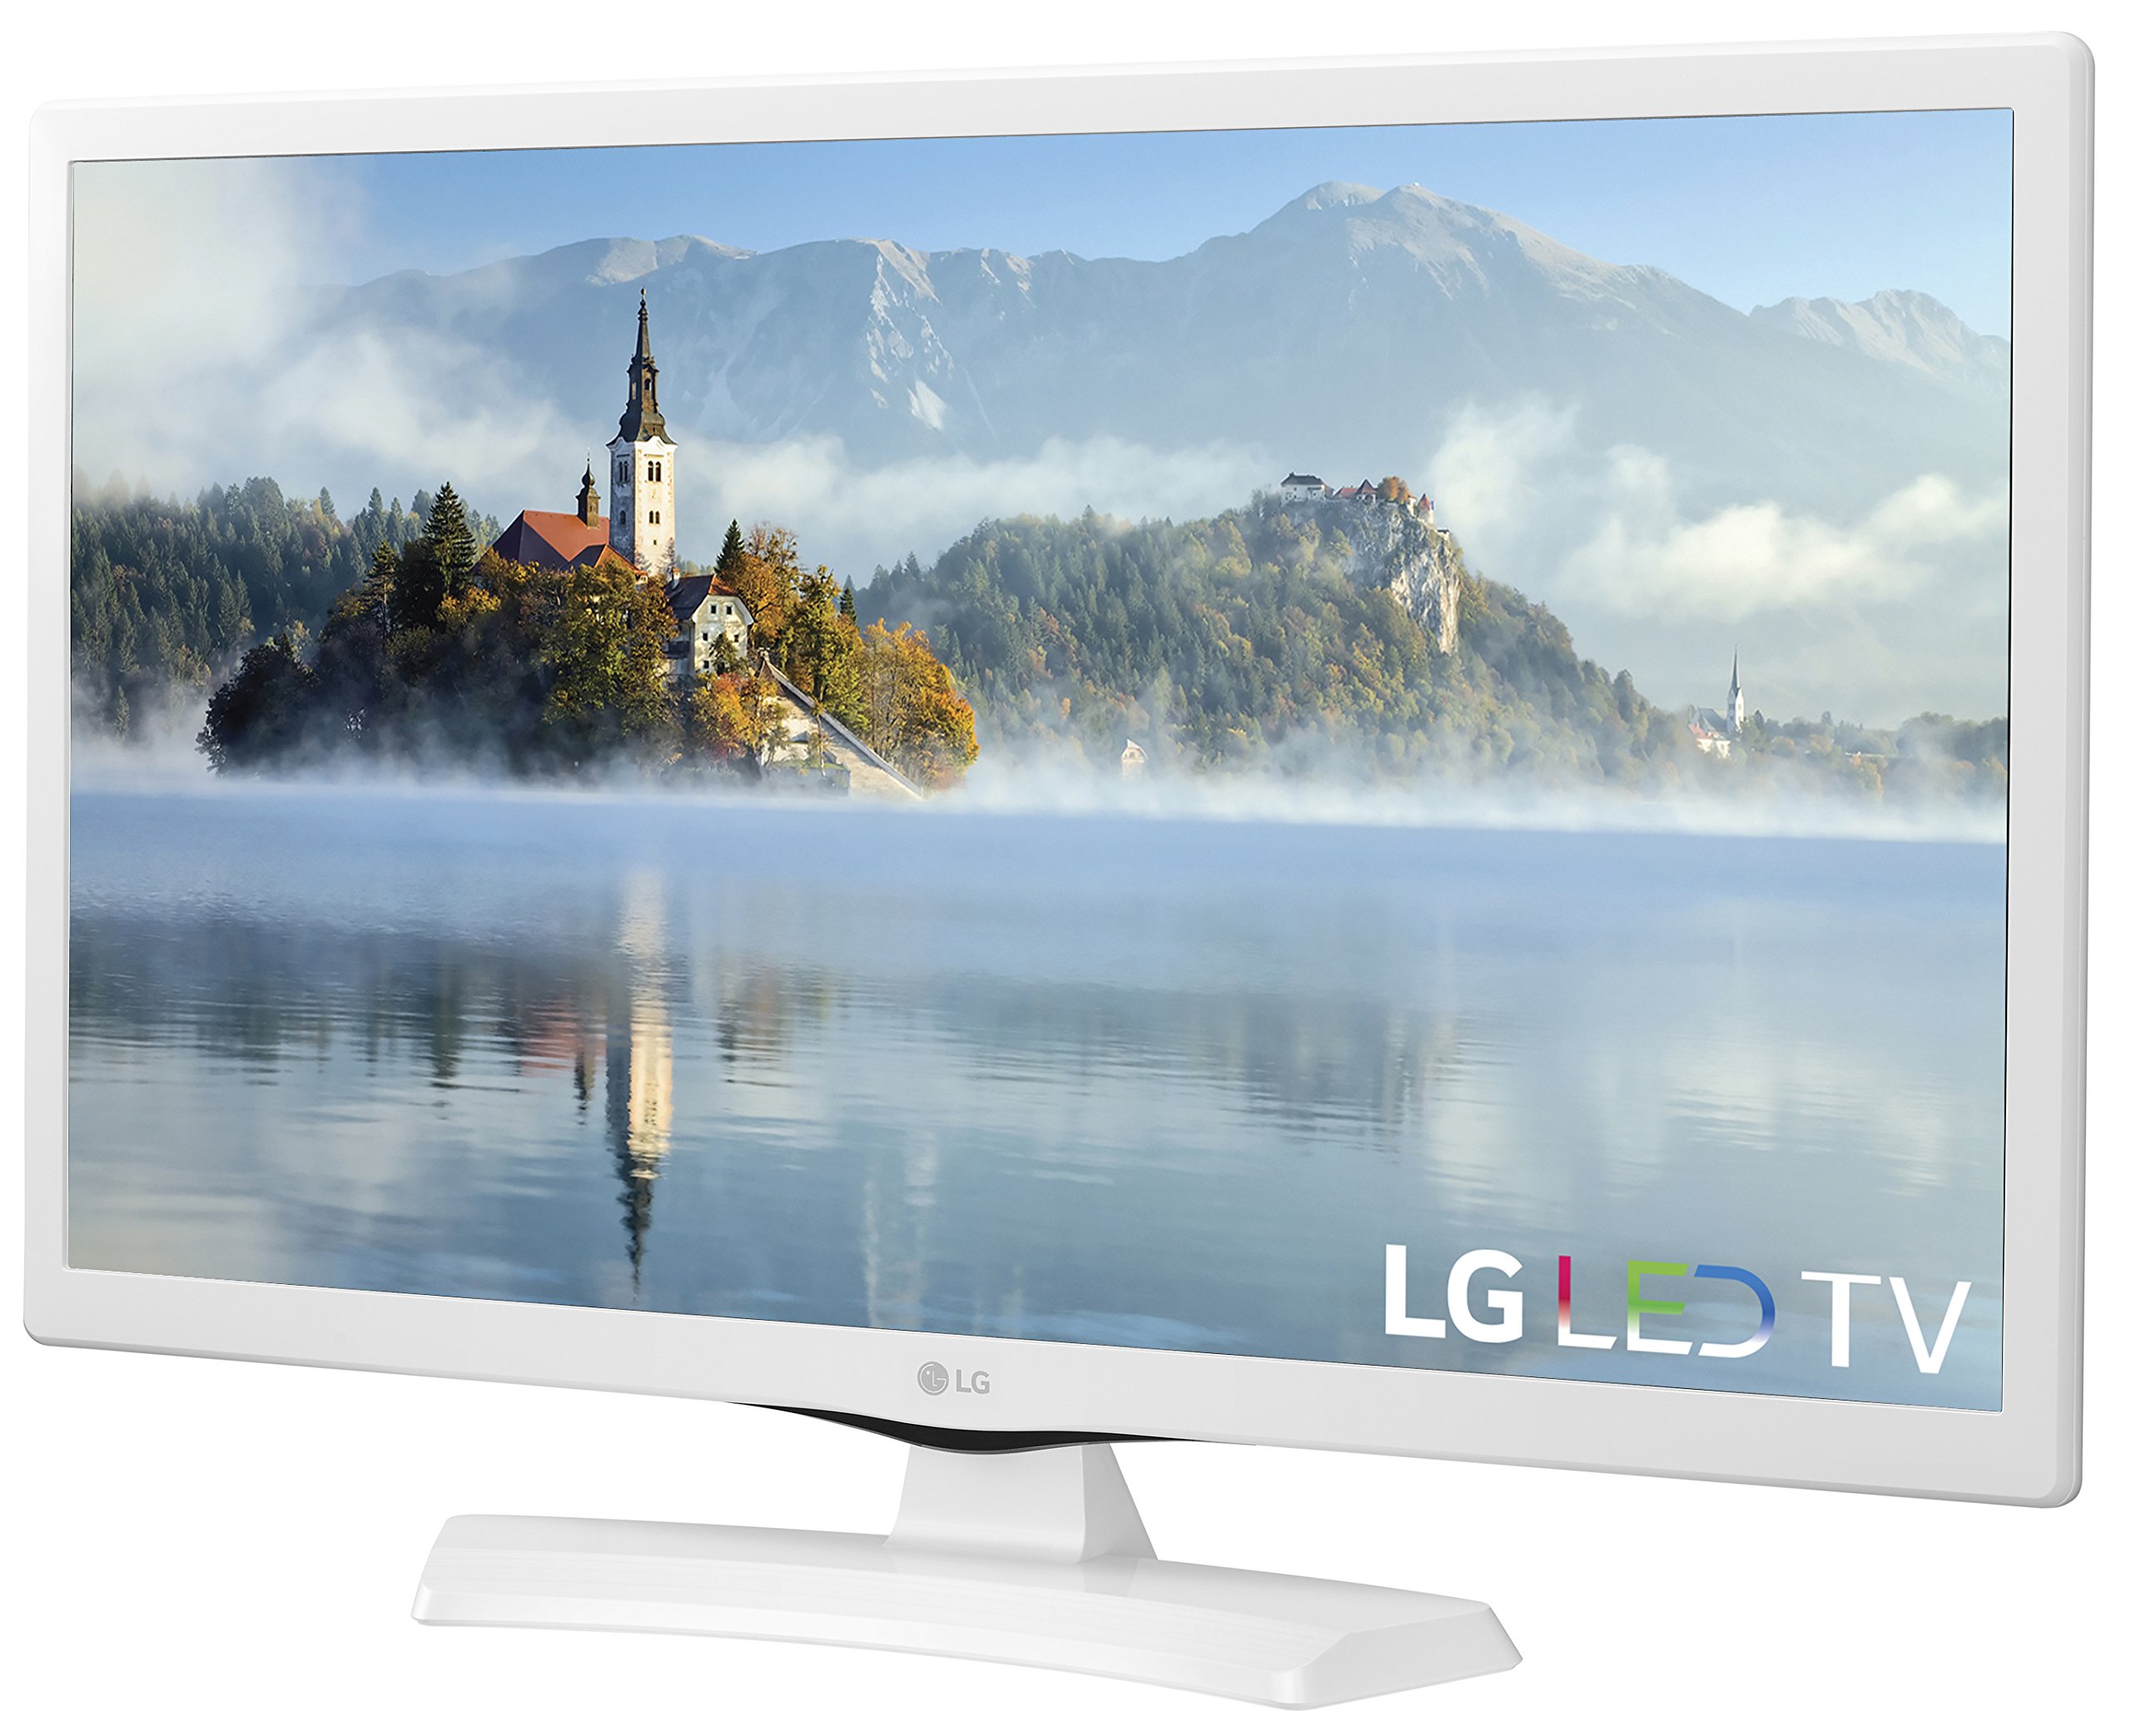 LG LED TV 24